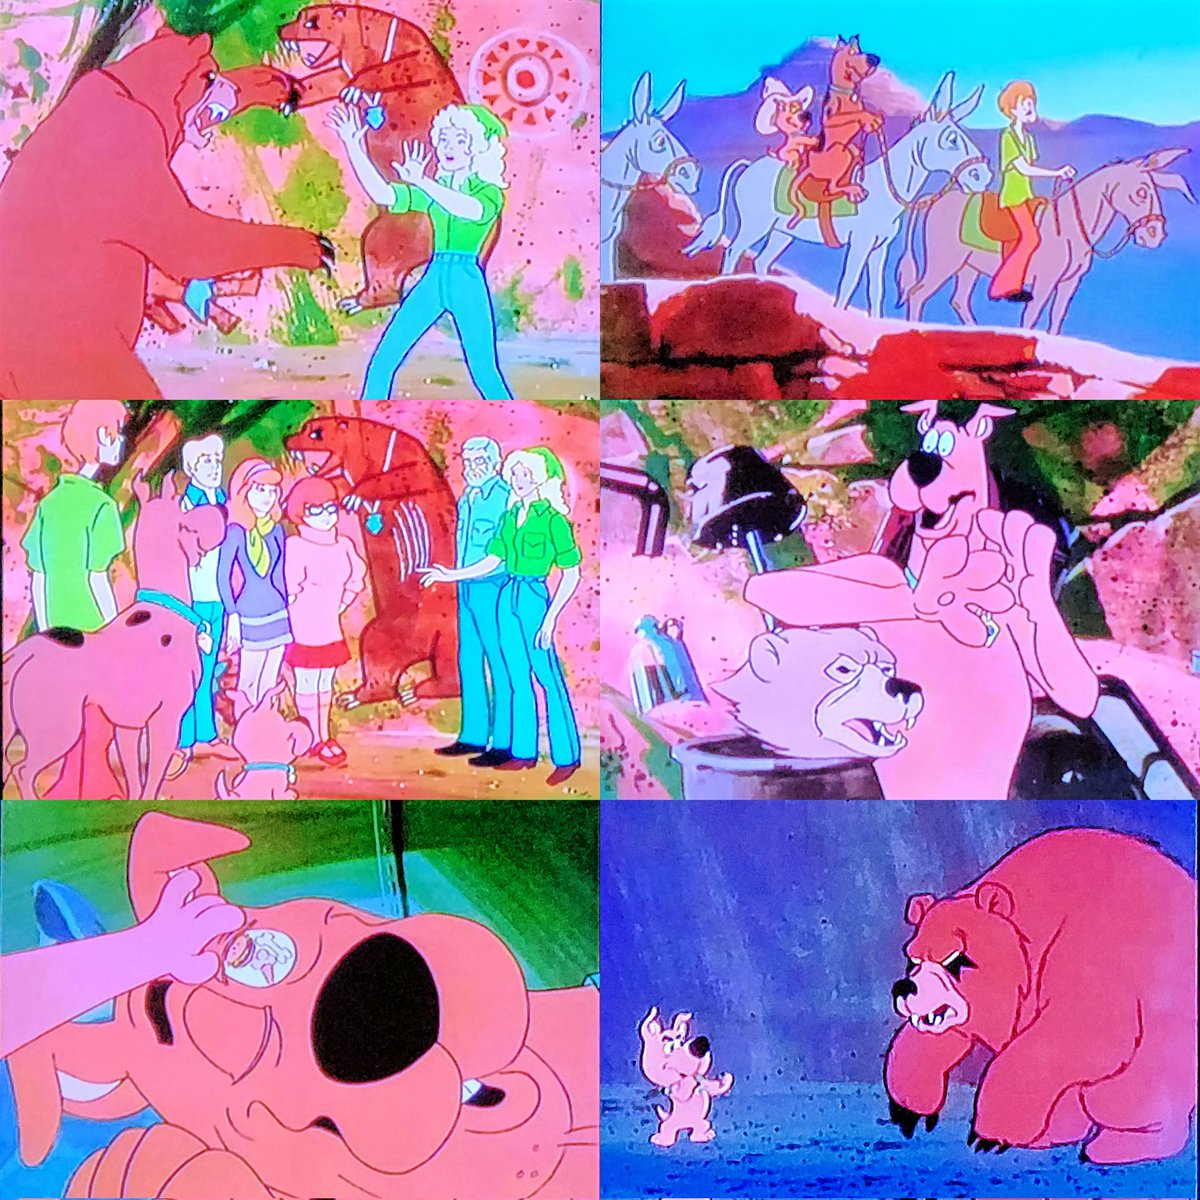 #NowWatching
Scooby-Doo & Scrappy-Doo🔎🐾
S01E08 Nov 10th, 1979🗓📺

'The Hairy Scare of the Devil Bear'

#ScoobyDoo #ScrappyDoo #ShaggyRogers #VelmaDinkley #DaphneBlake #FredJones #HannaBarbera #SaturdayMorningCartoons #Animation #TVSeries #Retro #Nostalgia #SundayFunday